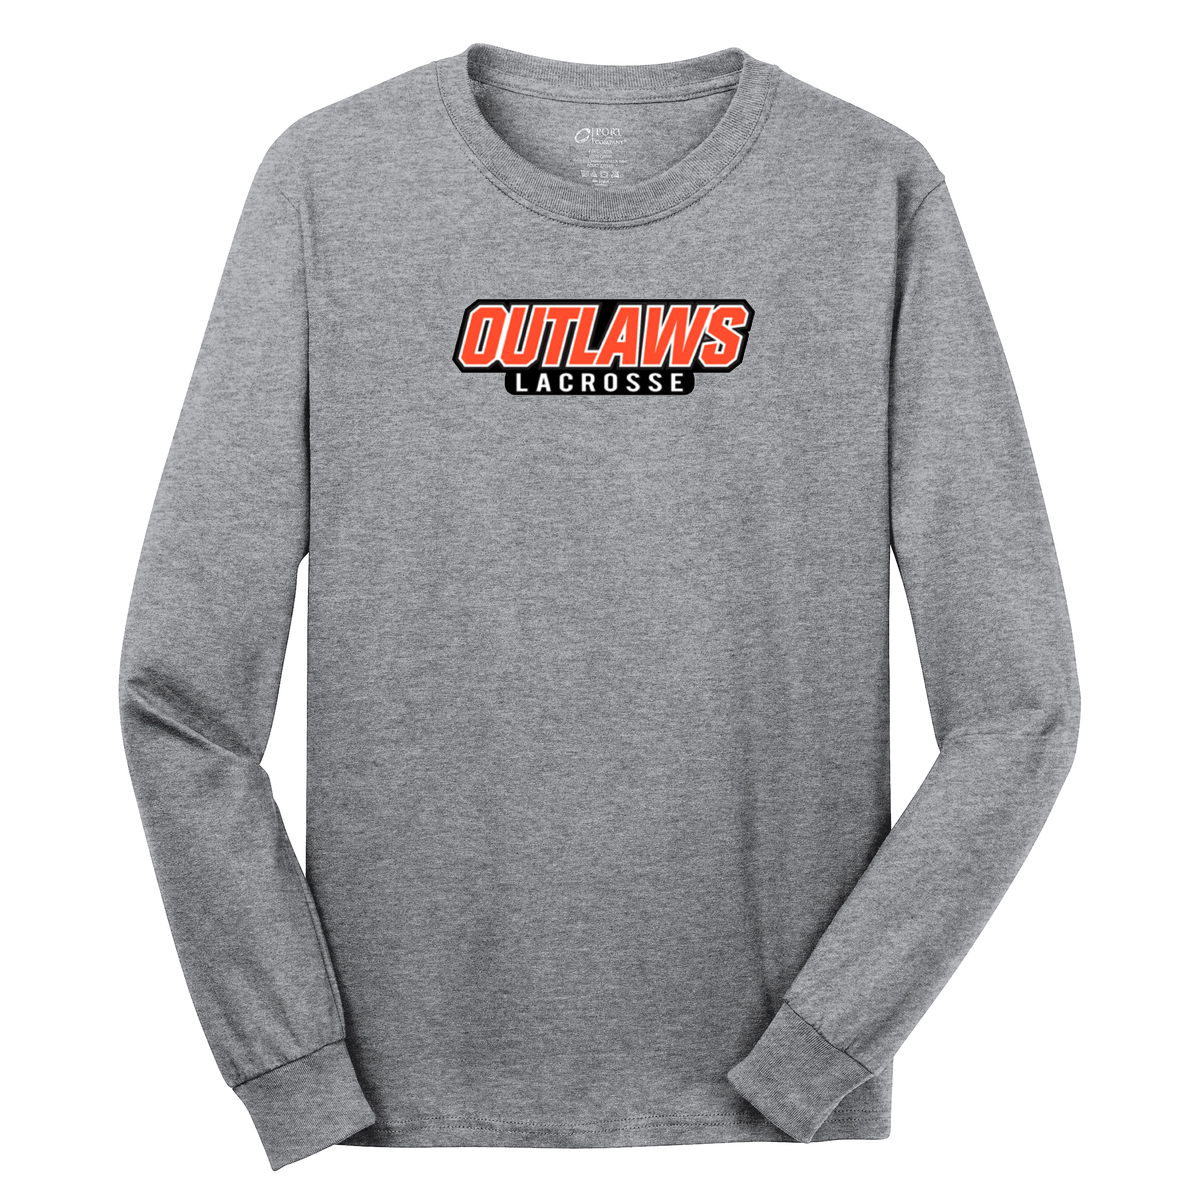 Outlaws Lacrosse Cotton Long Sleeve Shirt